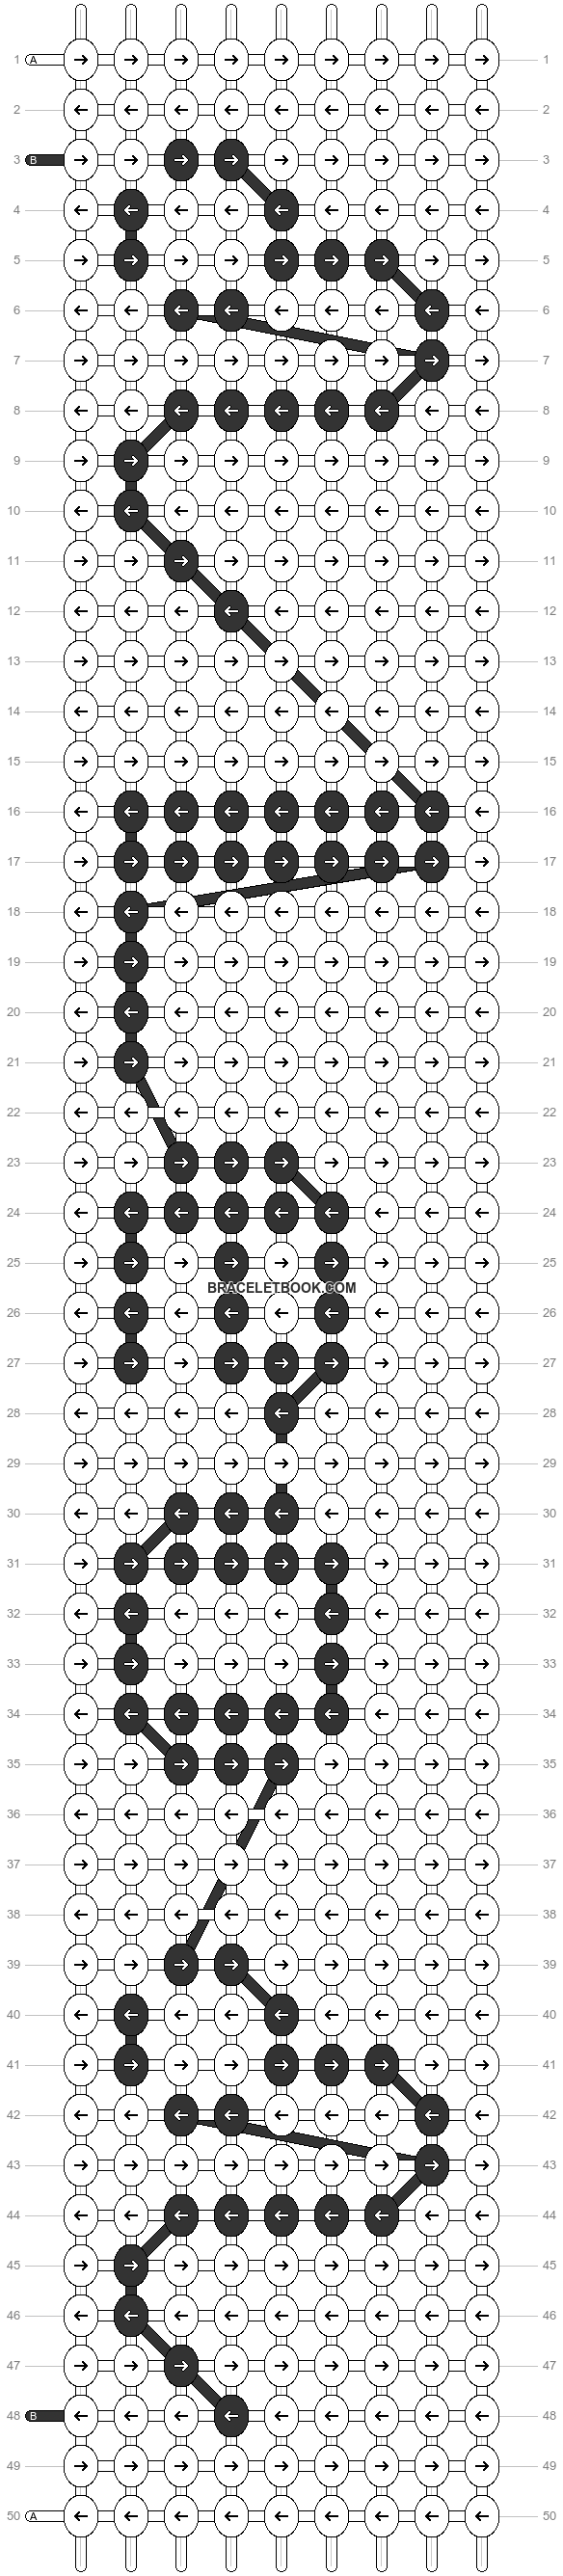 Alpha pattern #6174 variation #45814 pattern